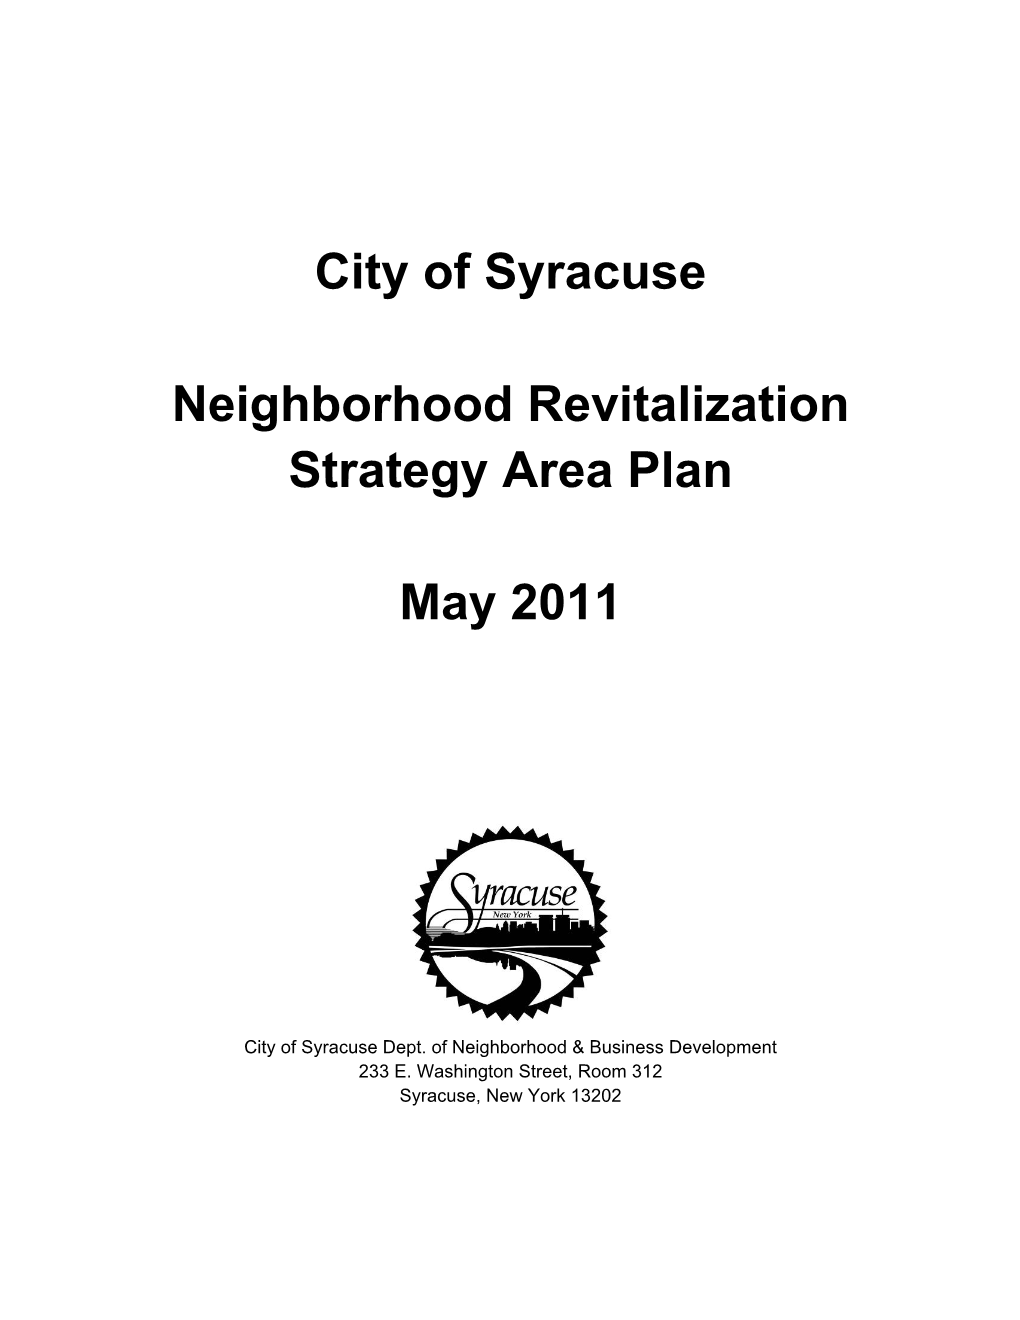 City of Syracuse Neighborhood Revitalization Strategy Area Plan